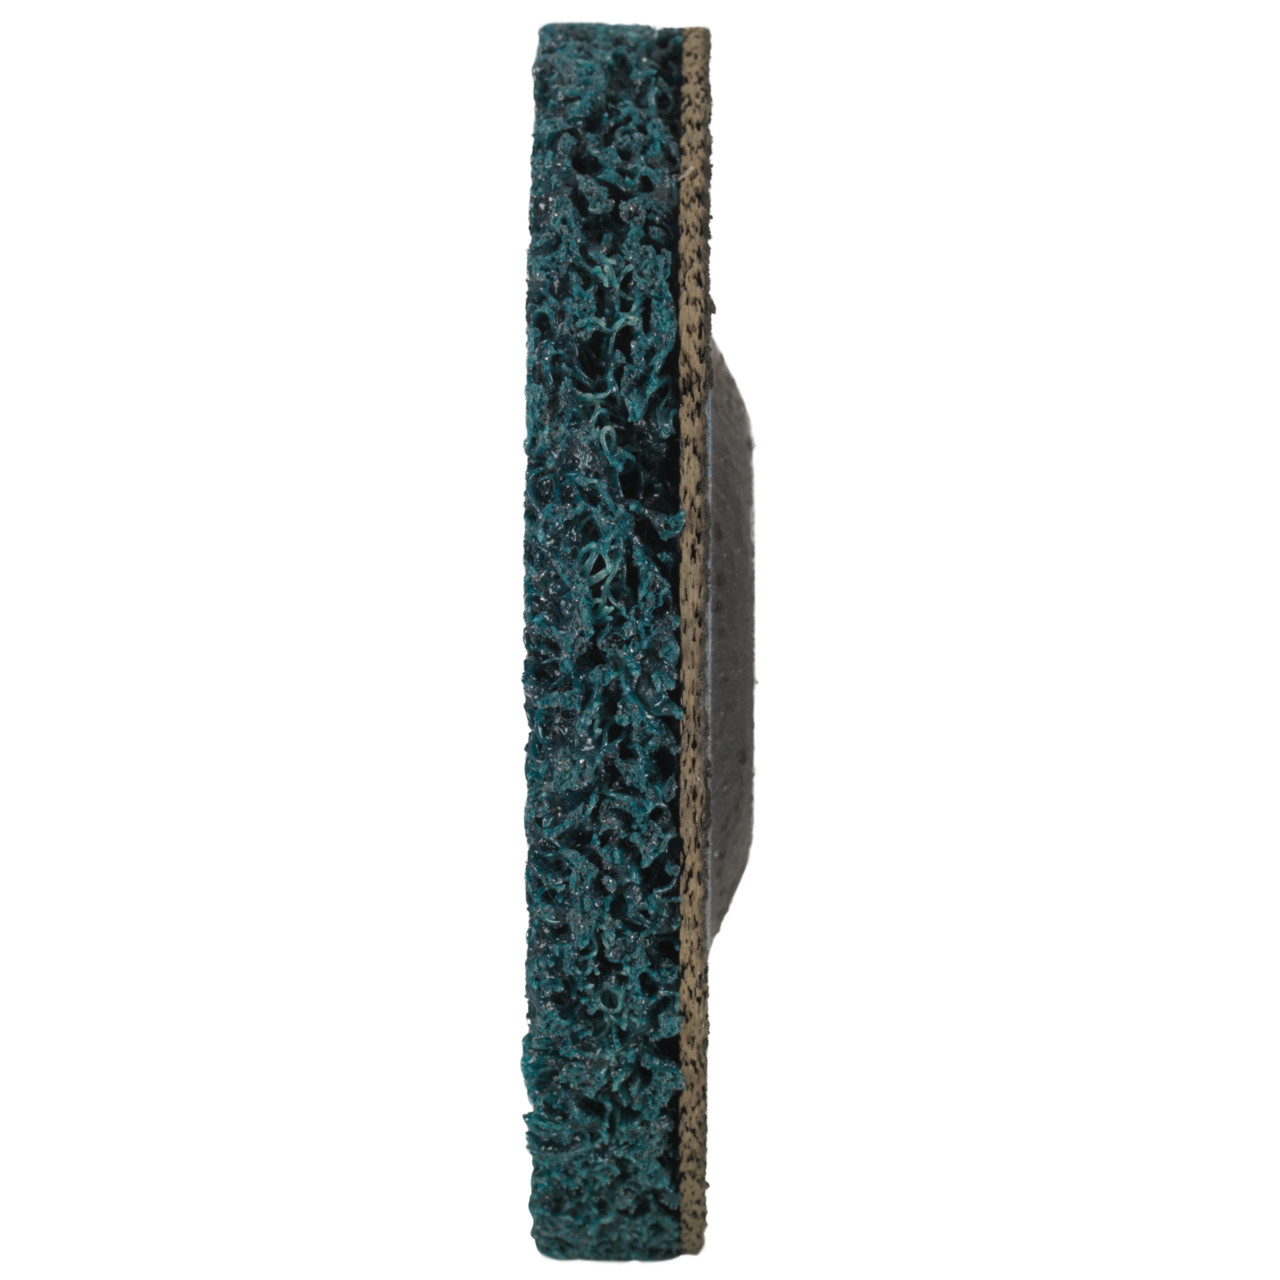 Tyrolit Grove reinigingsschijf DxH 125x22,2 Universeel toepasbaar, A EX. GROB, vorm: 28, Art. 34547536 (Oud nr. 34206237)